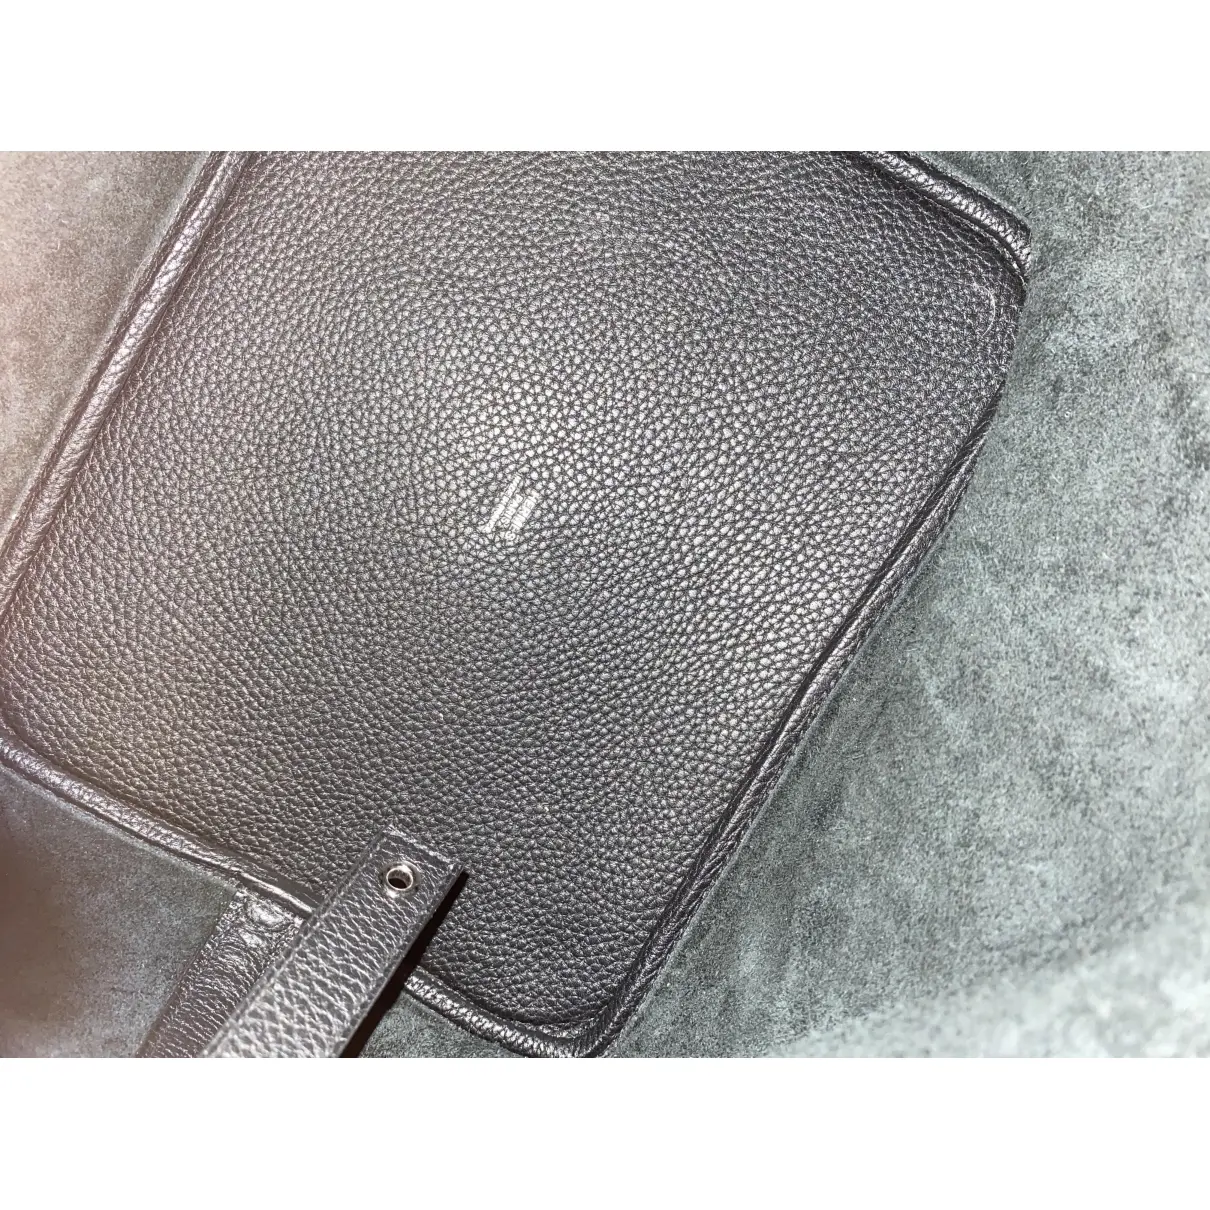 Buy Hermès Picotin leather tote online